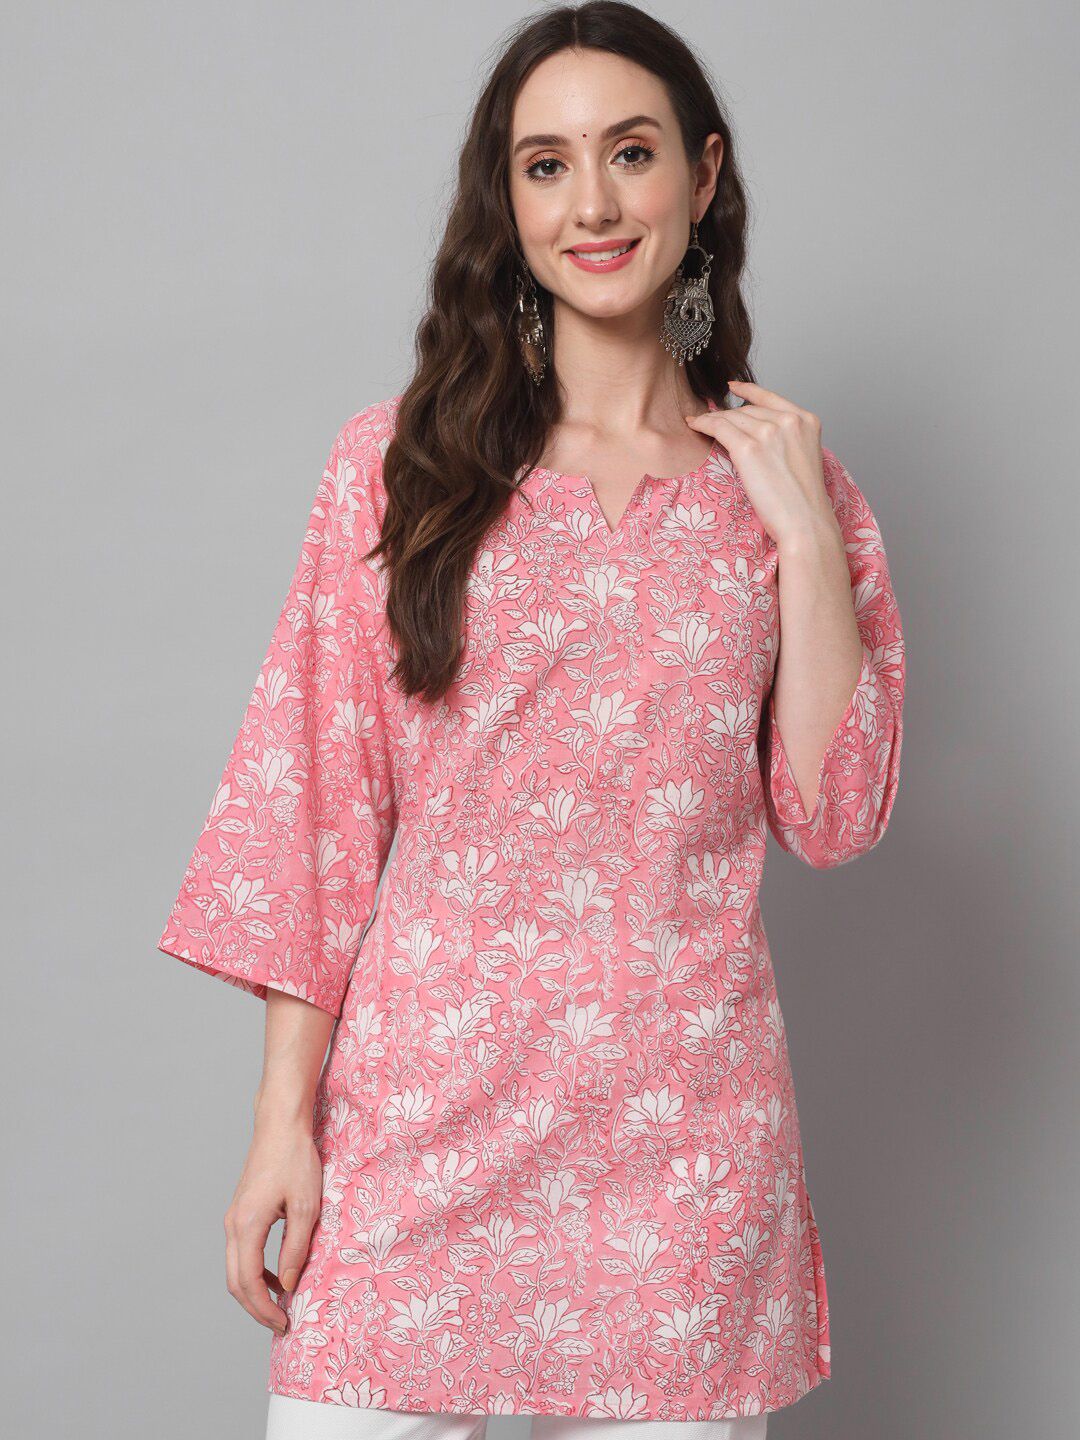 Silai Bunai Pink Floral Printed Pure Cotton Kurti Price in India